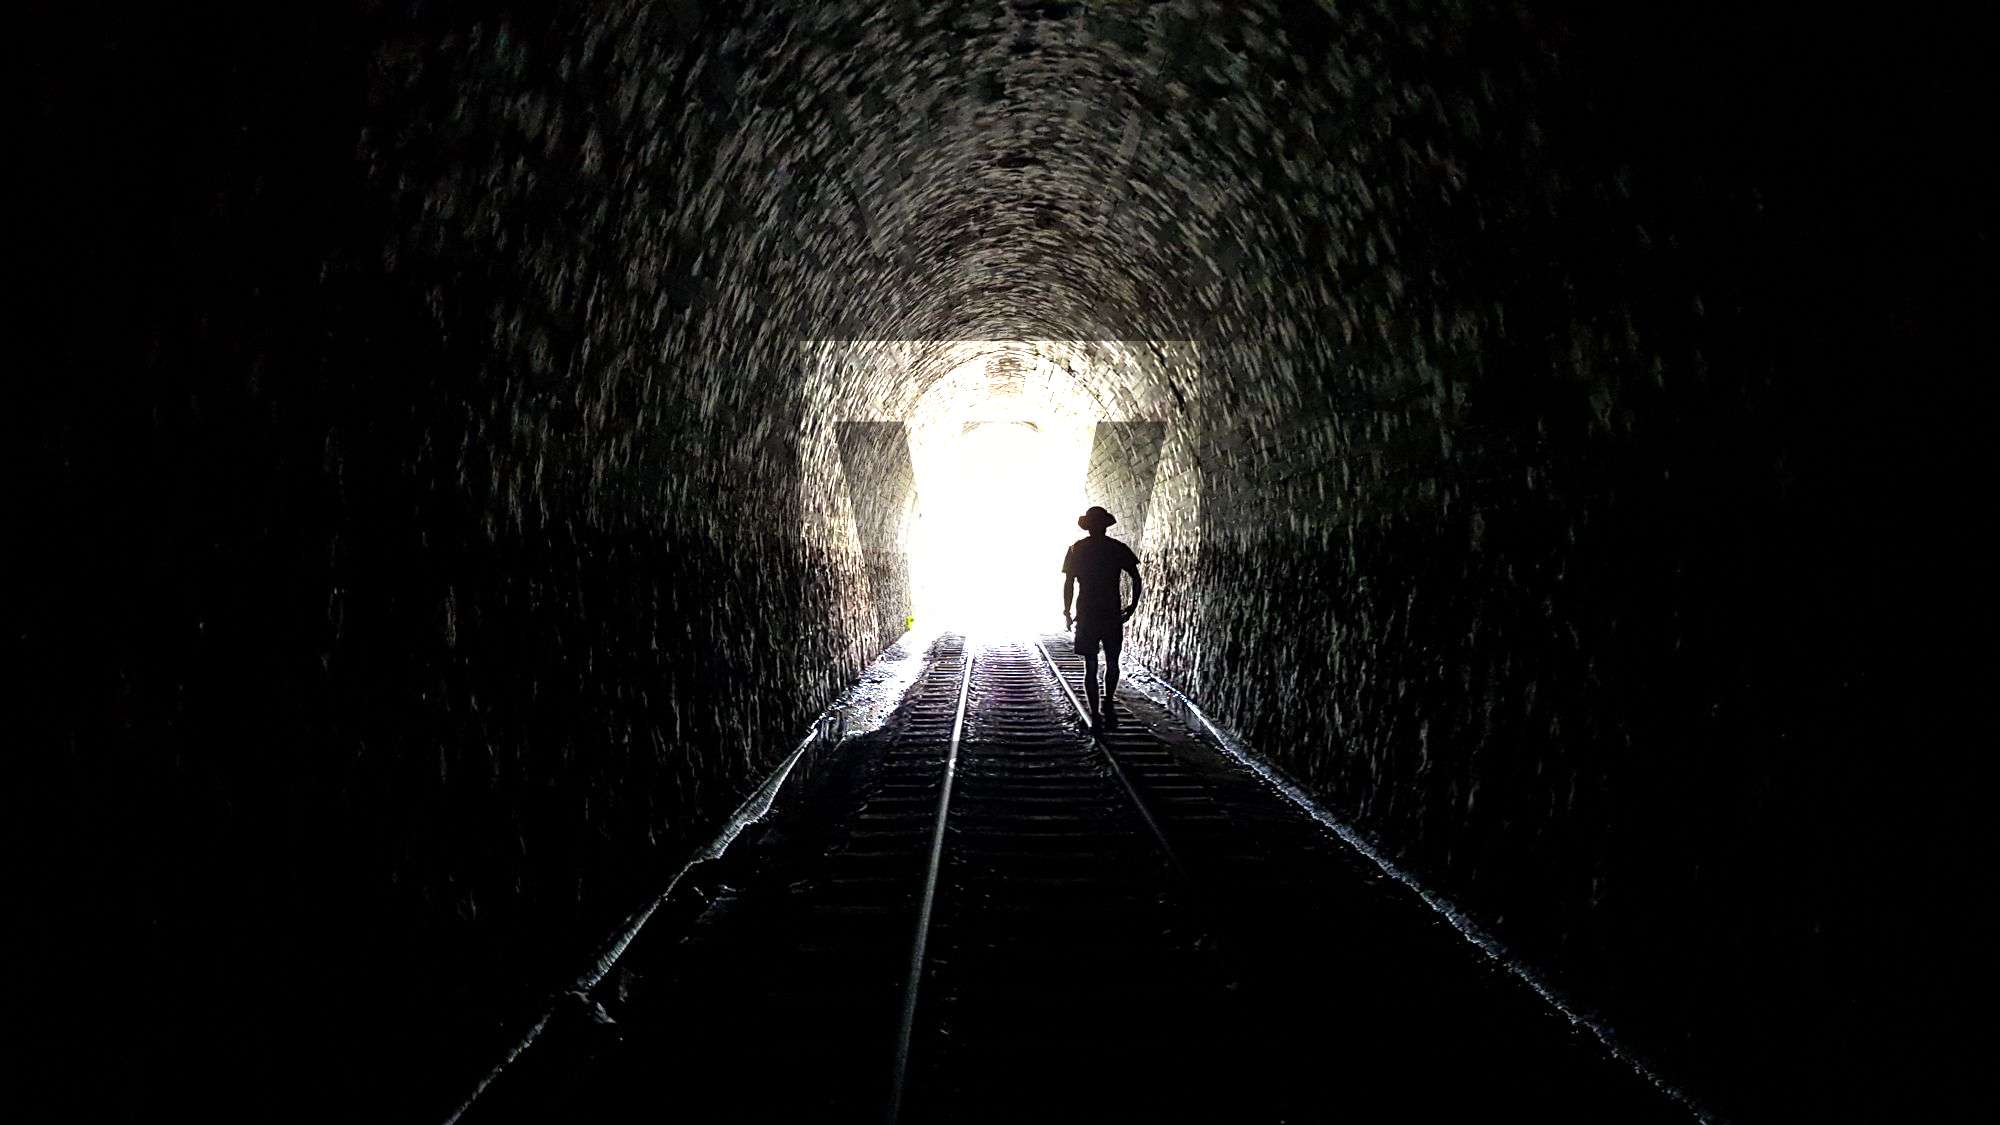 herberton train tunnels